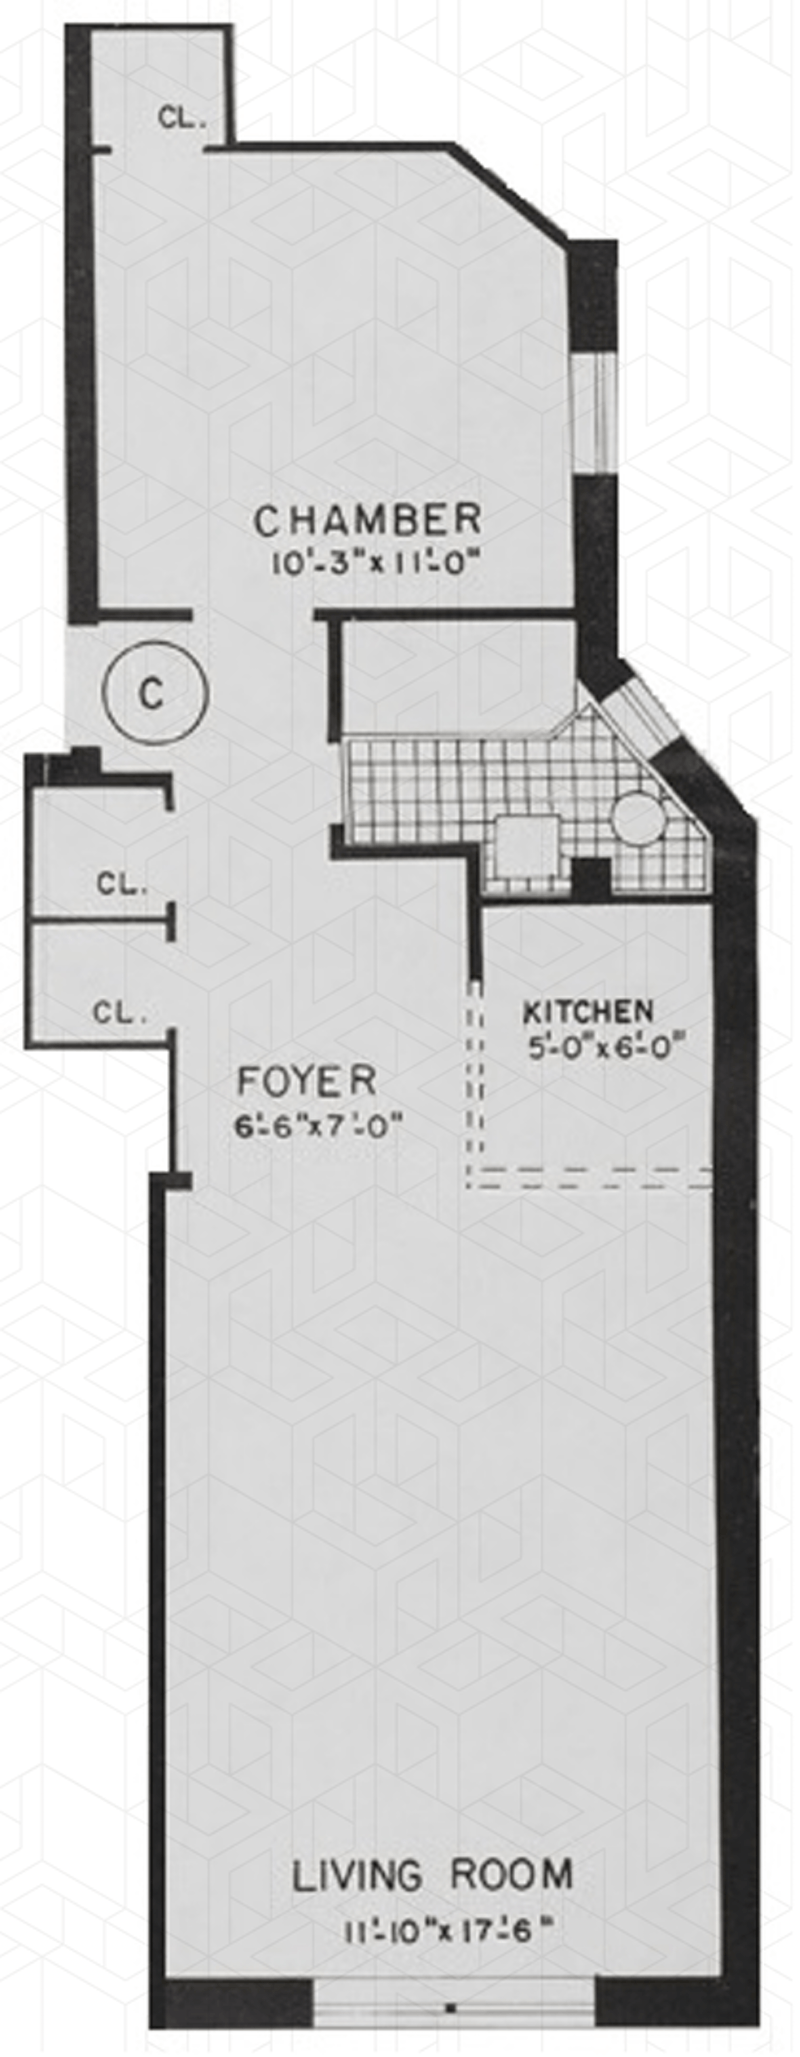 Floorplan for 534 East 88th Street, 2C